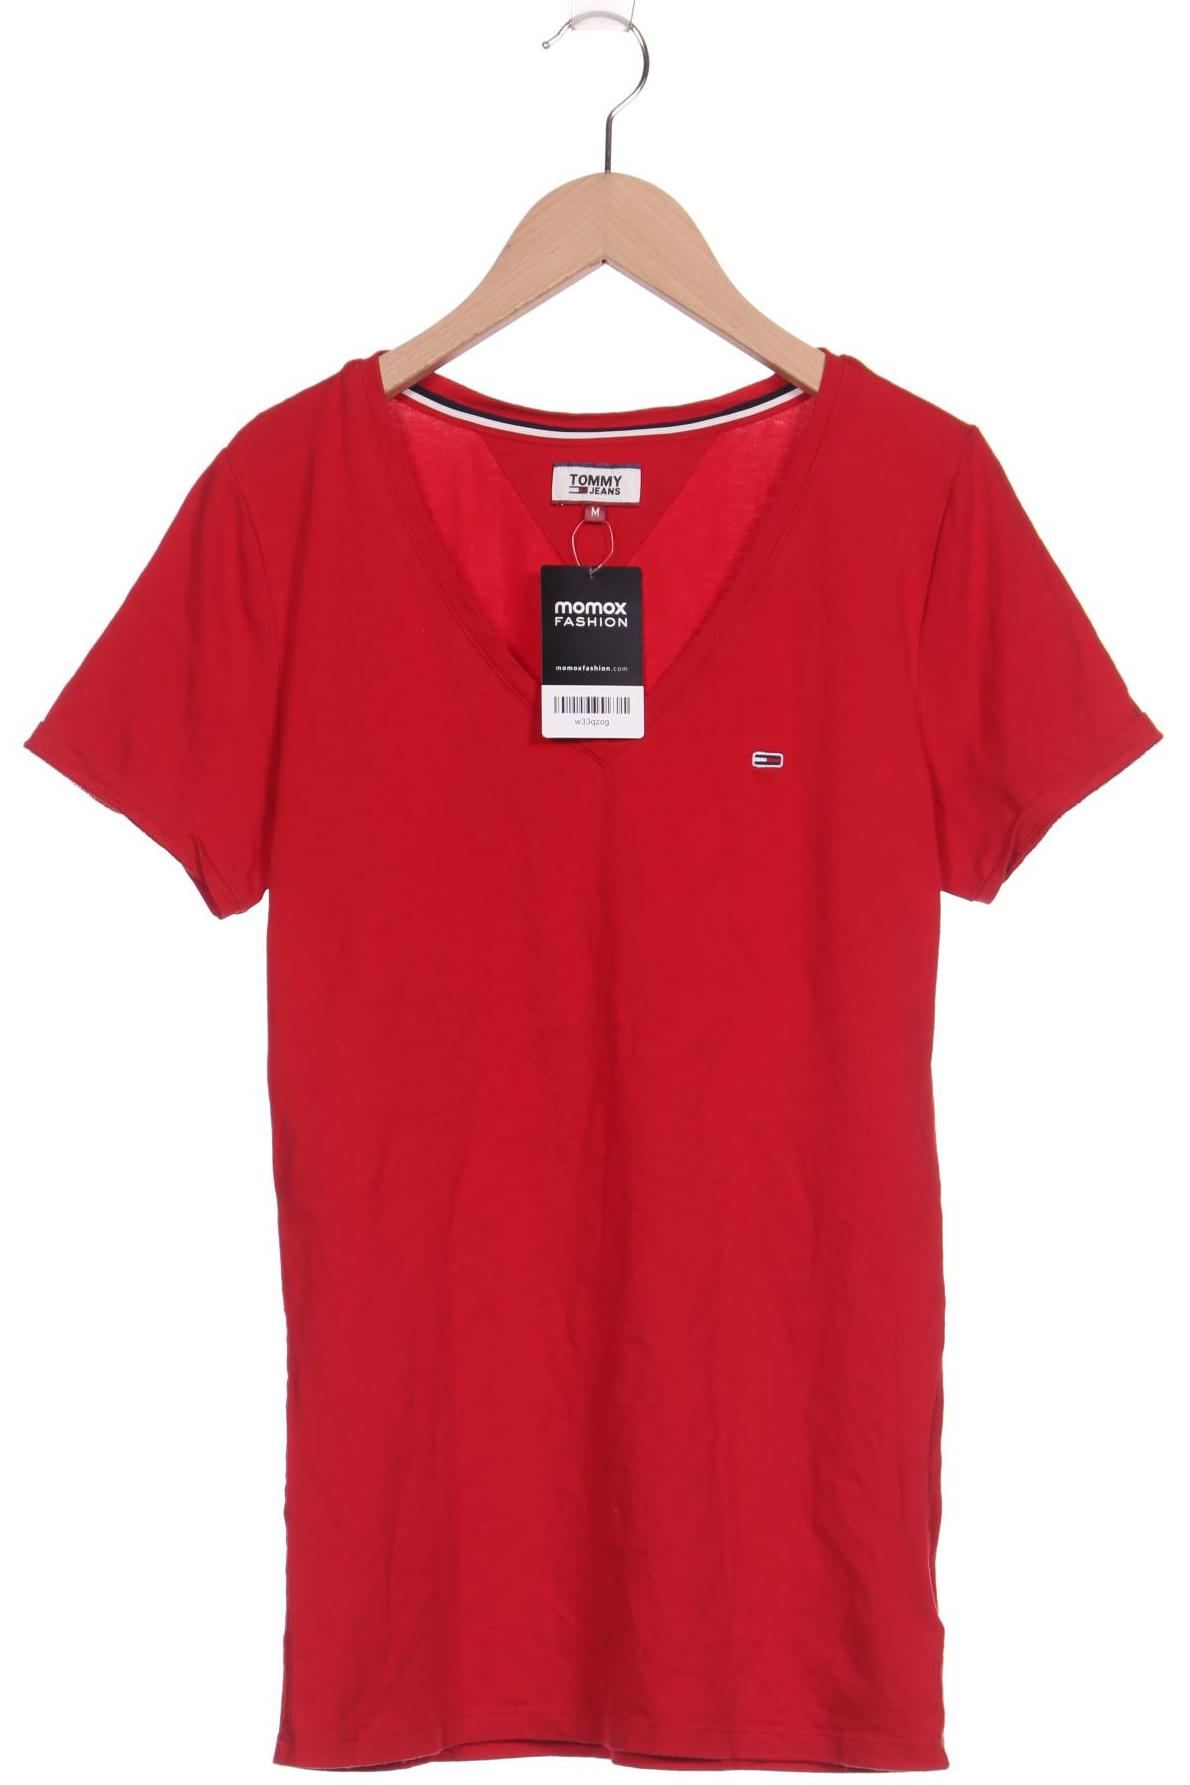 Tommy Jeans Damen T-Shirt, rot, Gr. 38 von Tommy Jeans